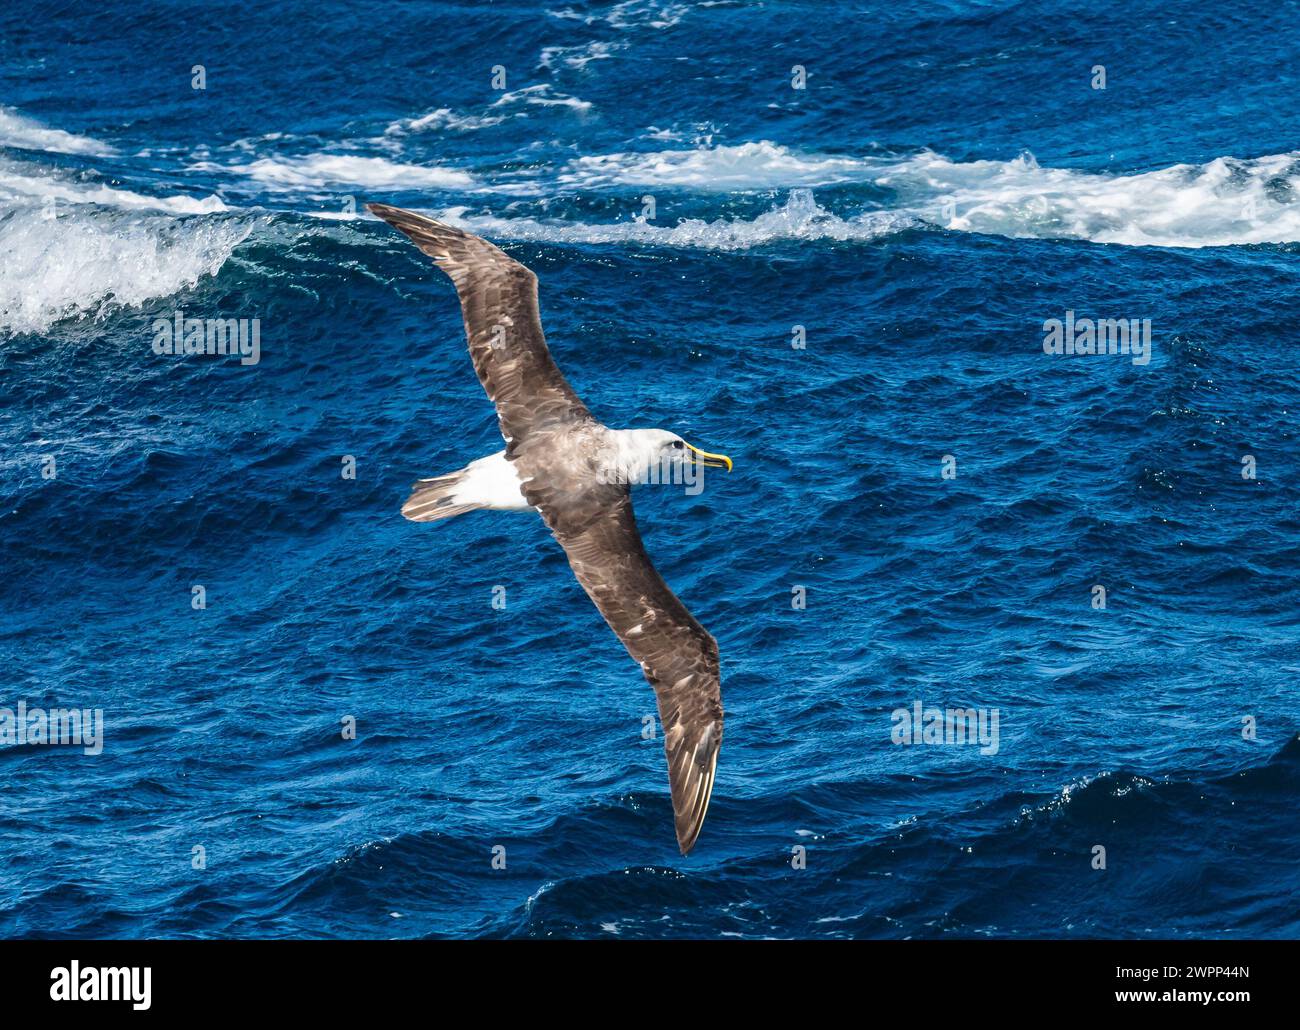 A Buller's Albatross (Thalassarche bulleri) flying over ocean. Pacific Ocean, off the coast of Chile. Stock Photo